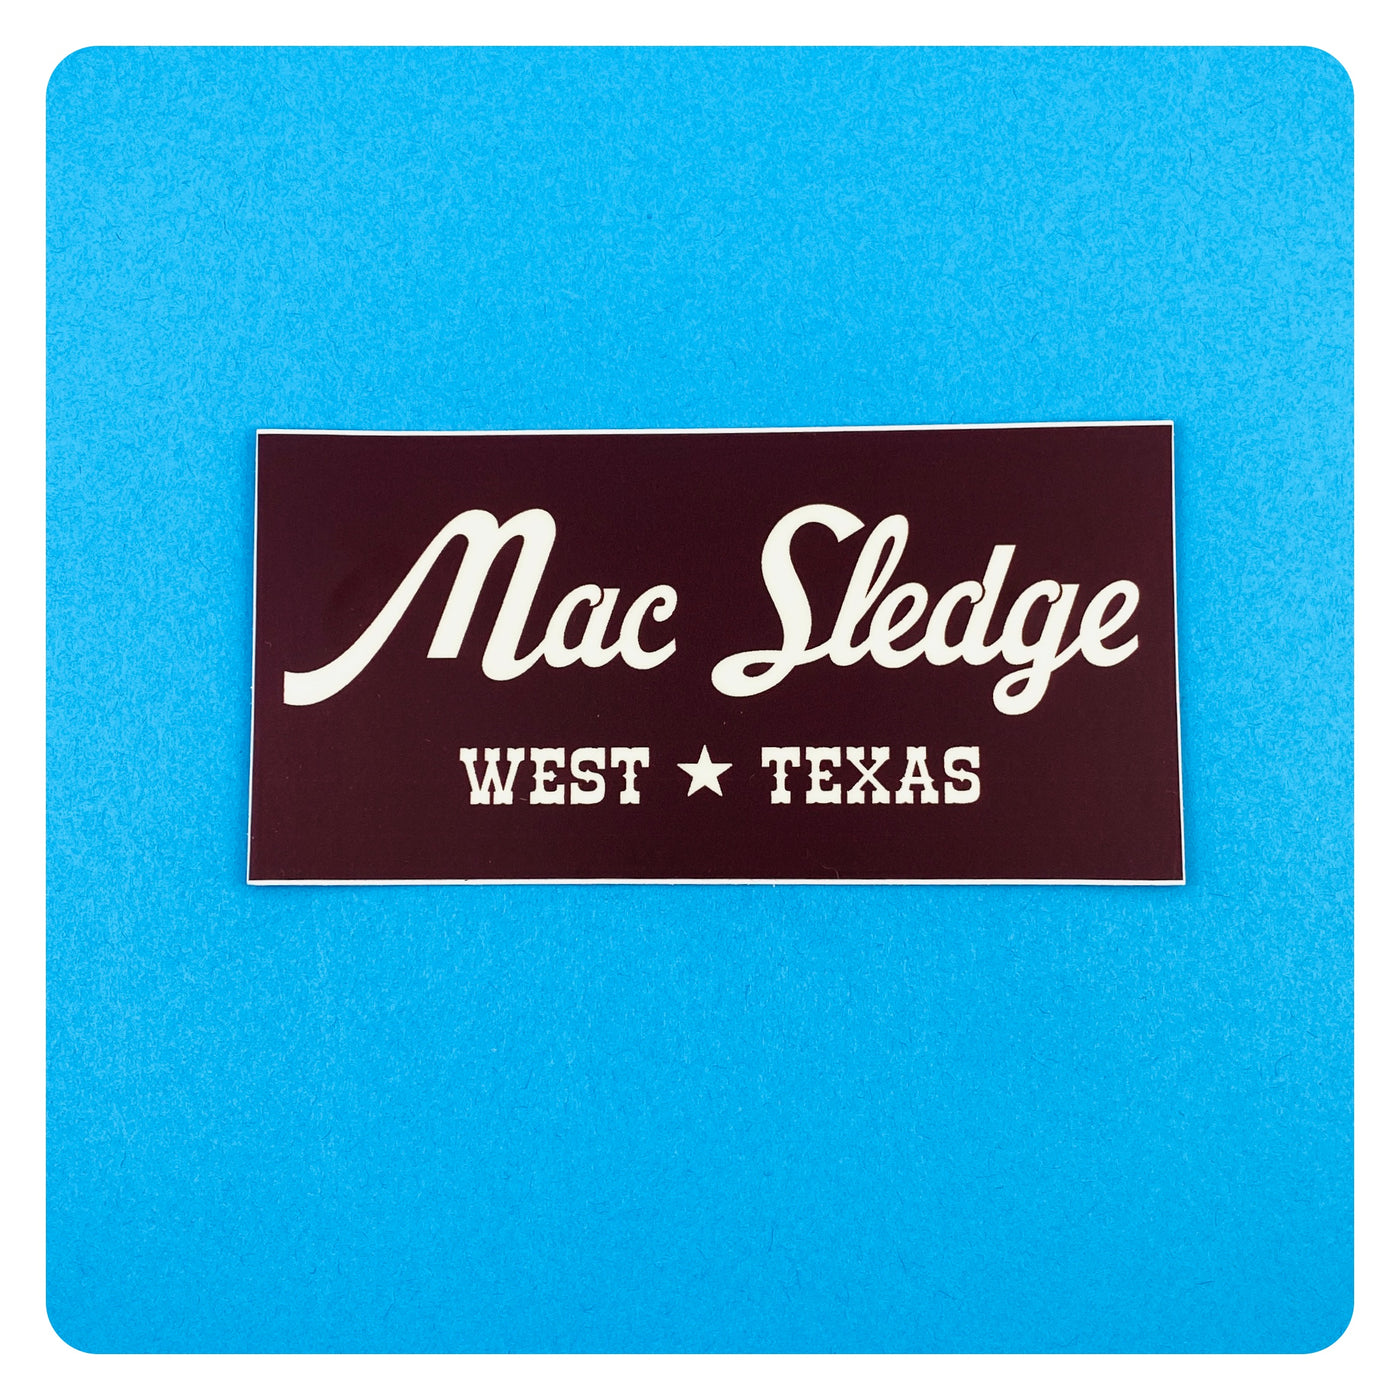 Mac Sledge Sticker